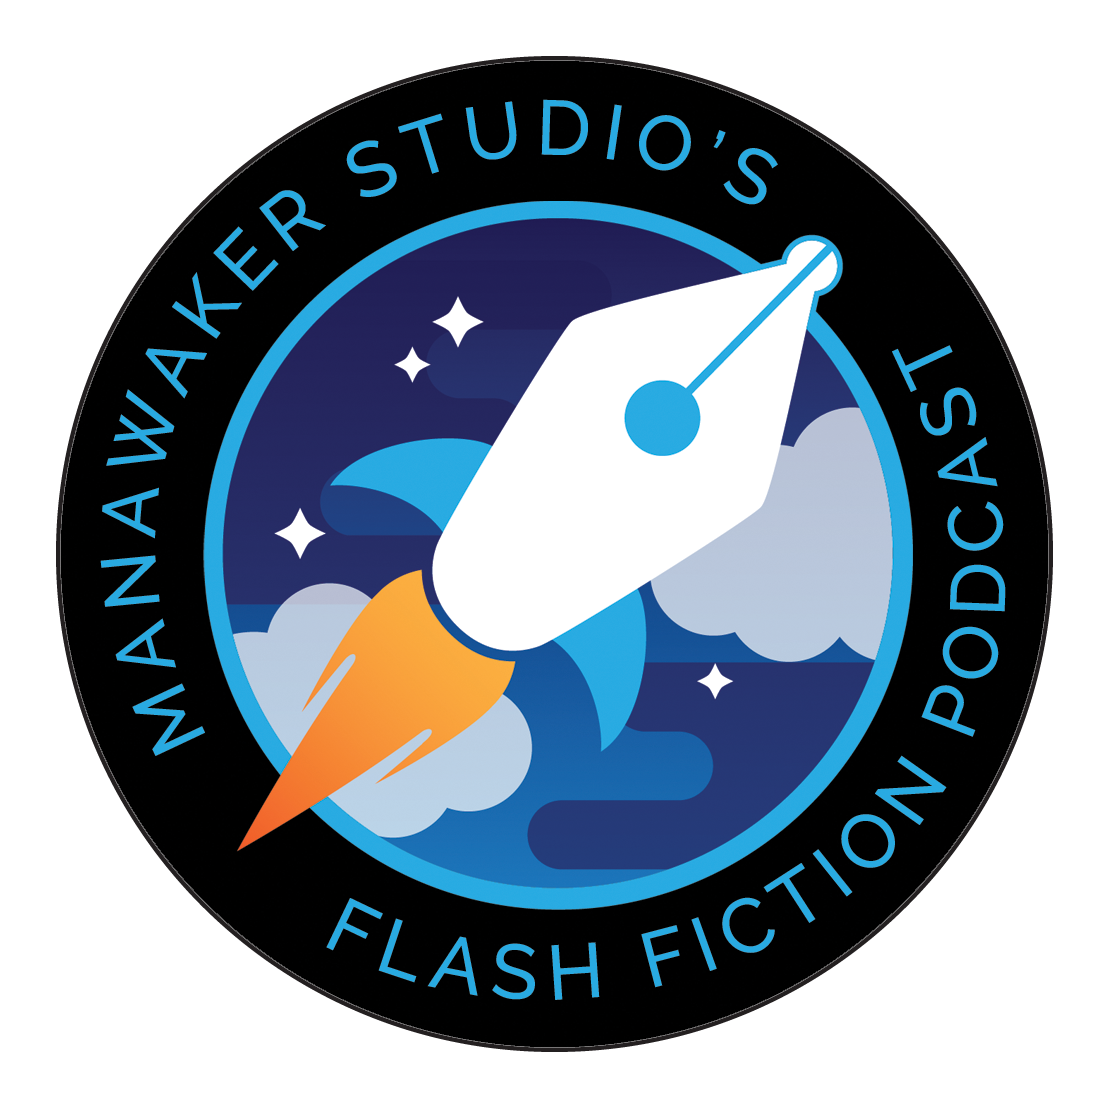 Manawaker Studio's Flash Fiction Podcast